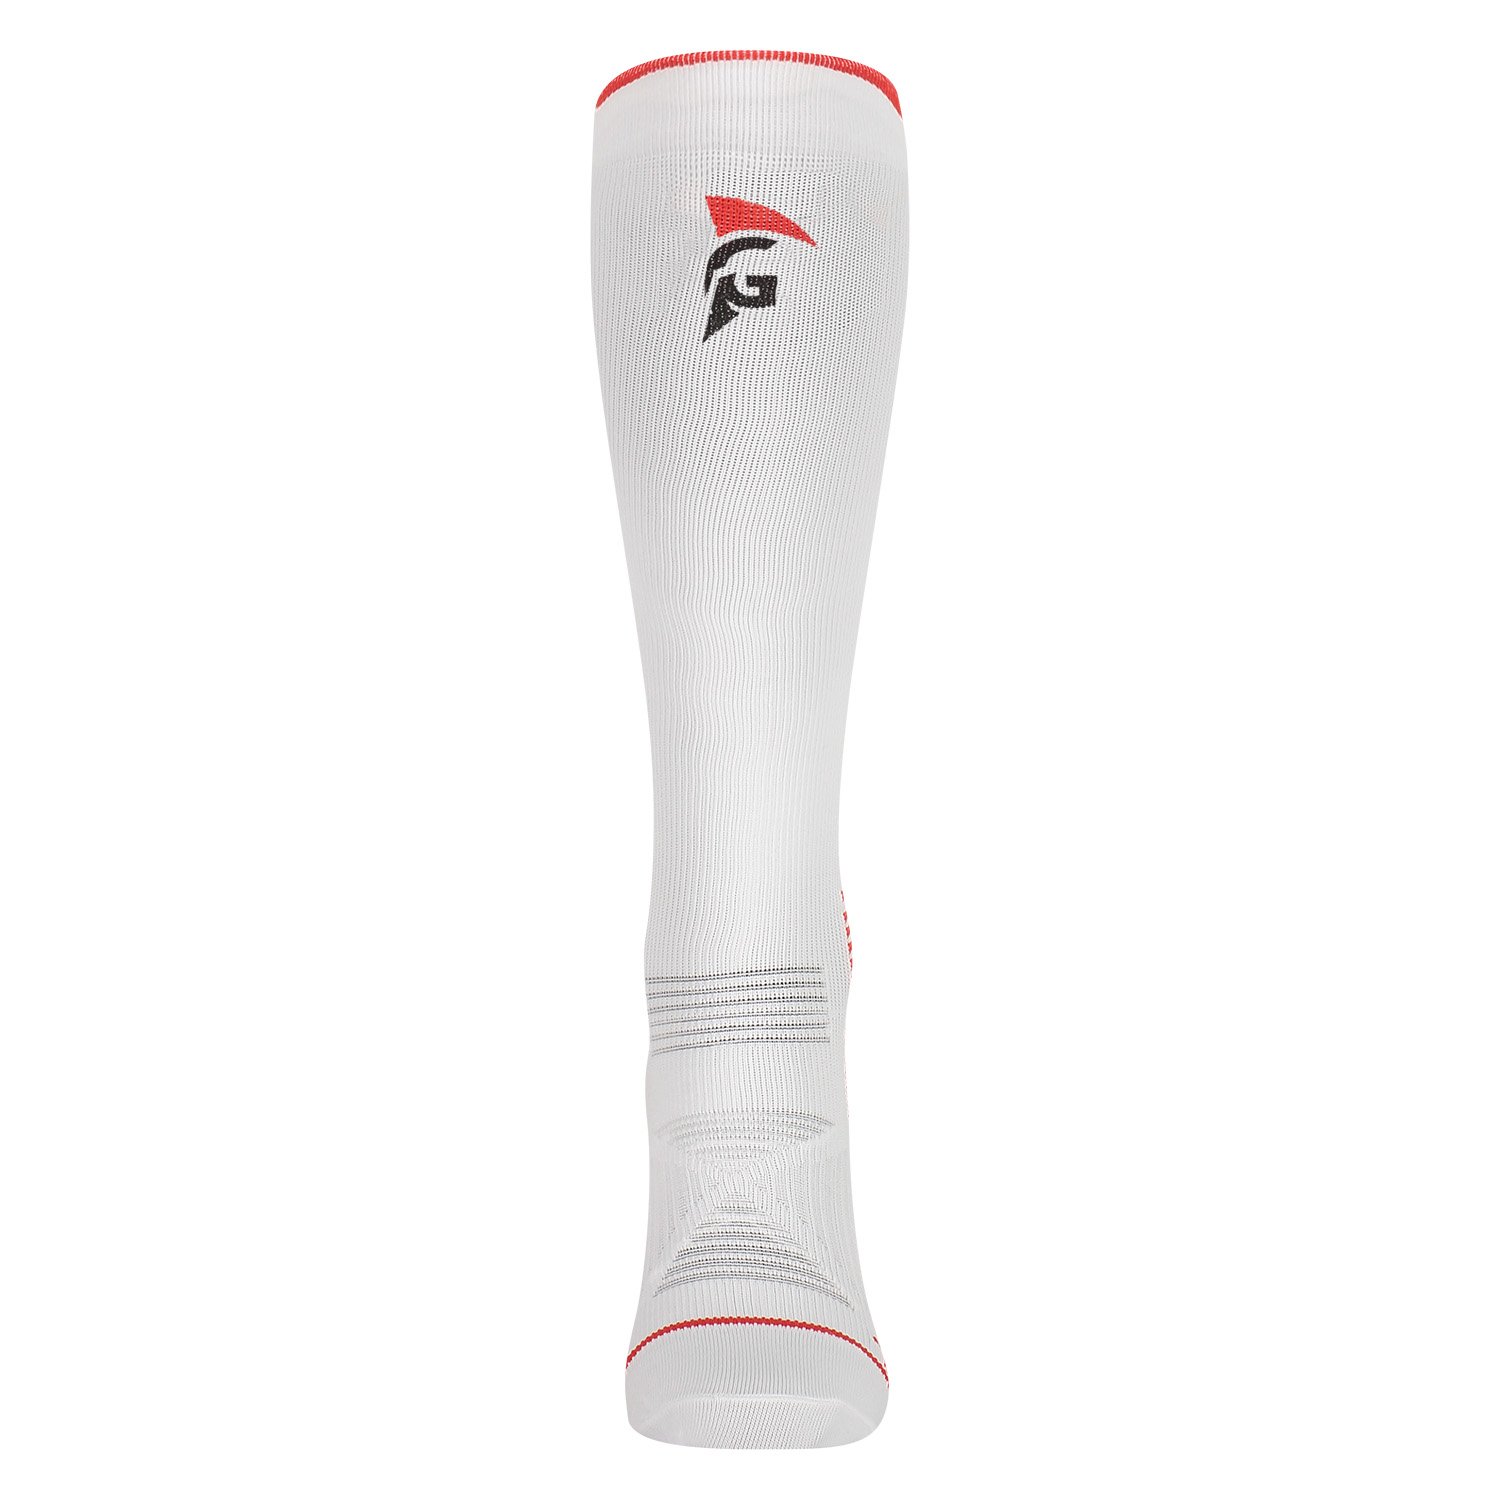 gladiator sports compression stockings in white